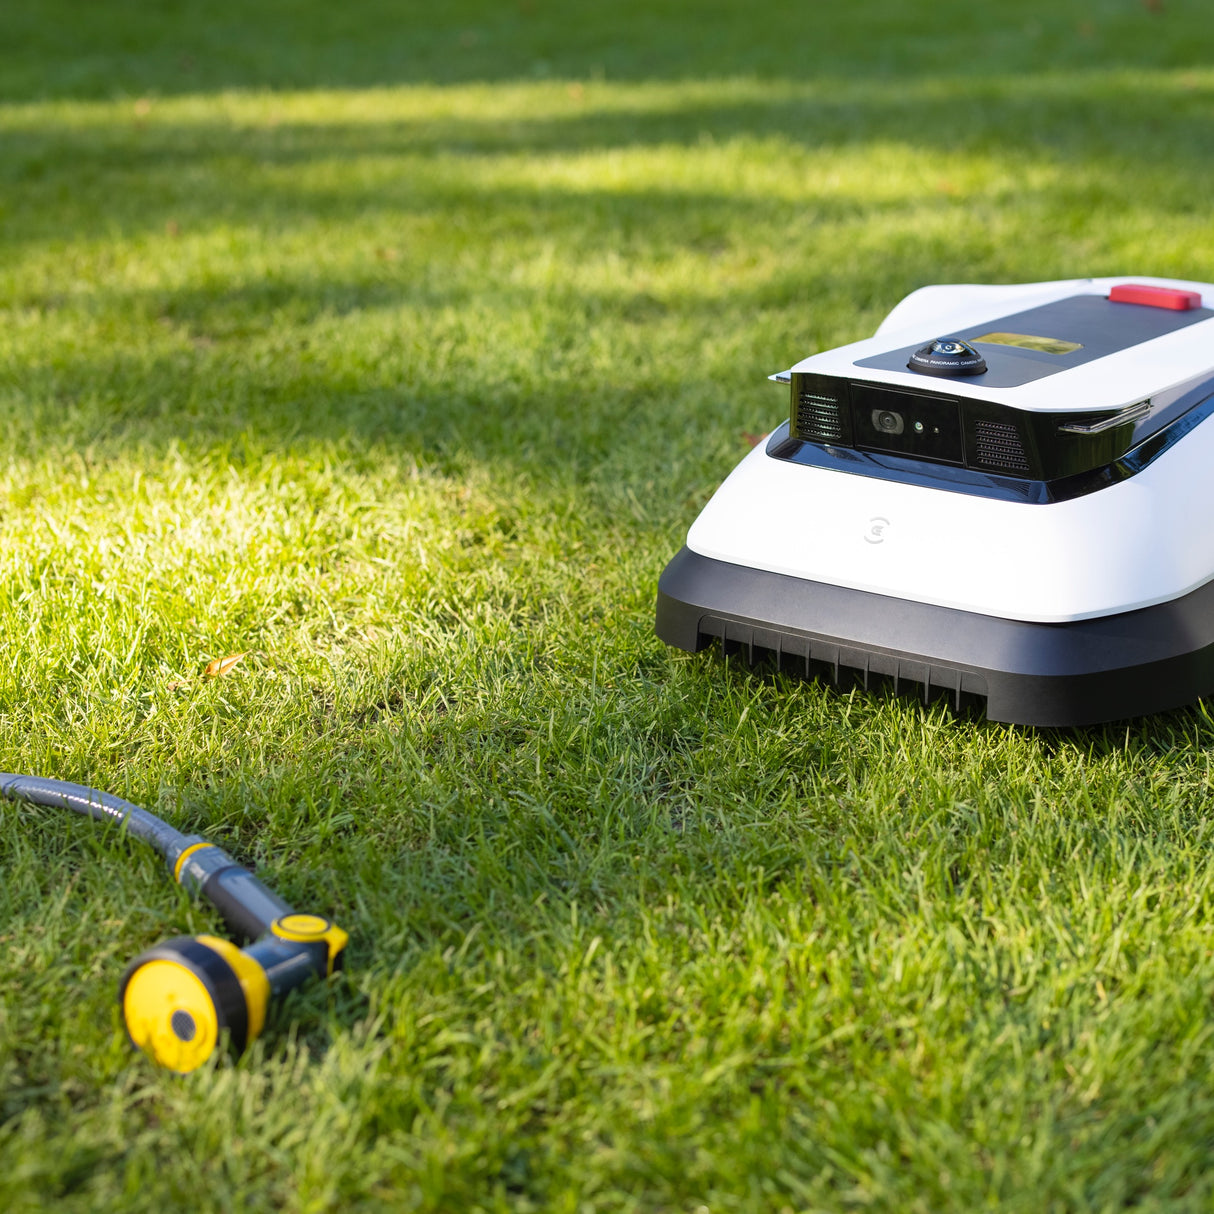 GOAT G1 Robotic Lawn Mower